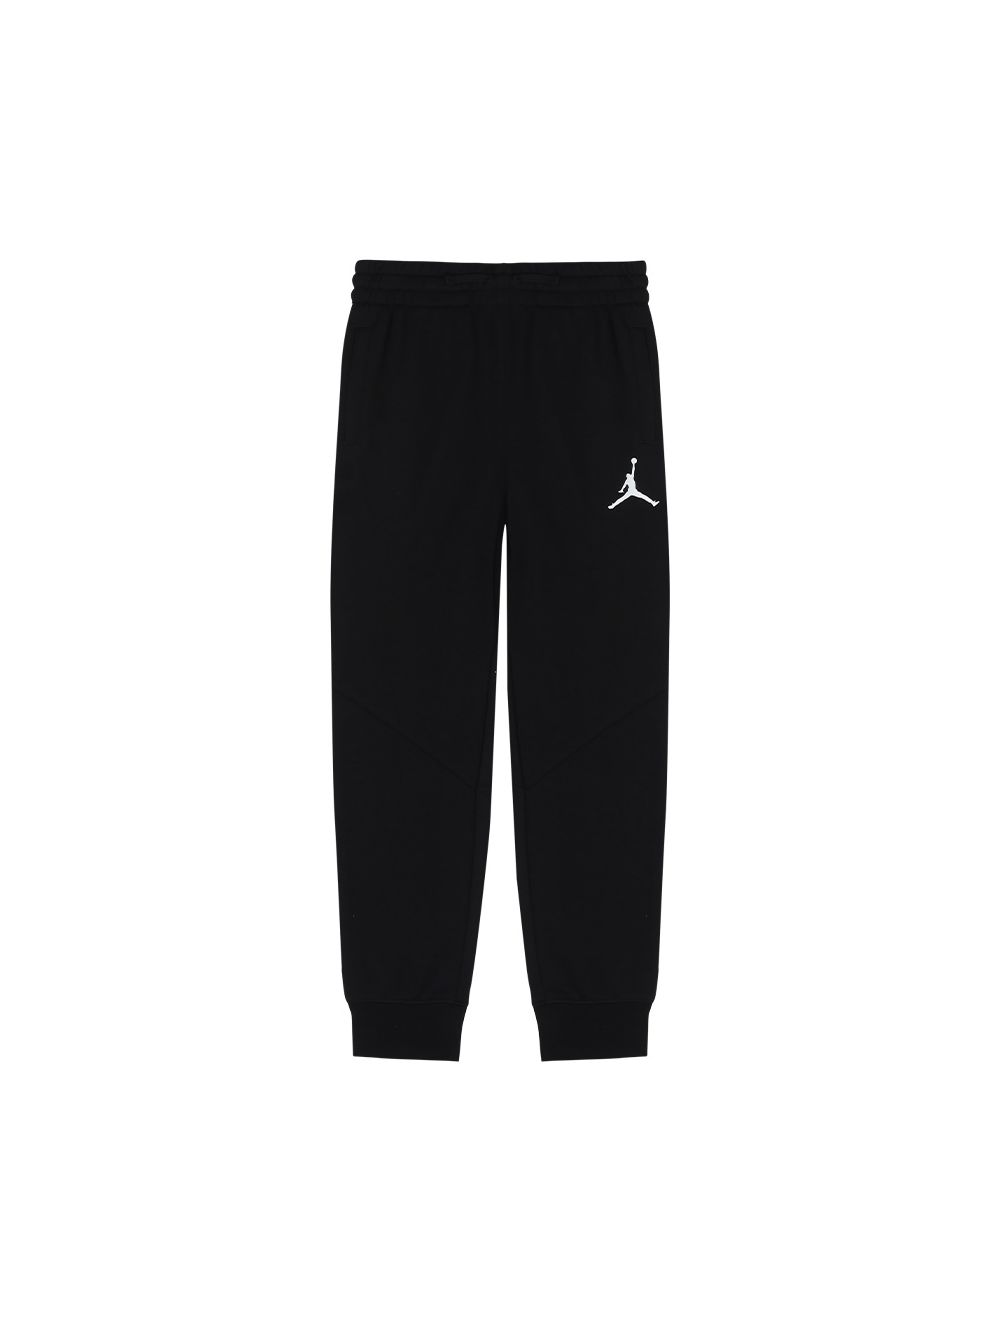 Shop Air Jordan Sport Crossover Youth Pants Black | Studio 88